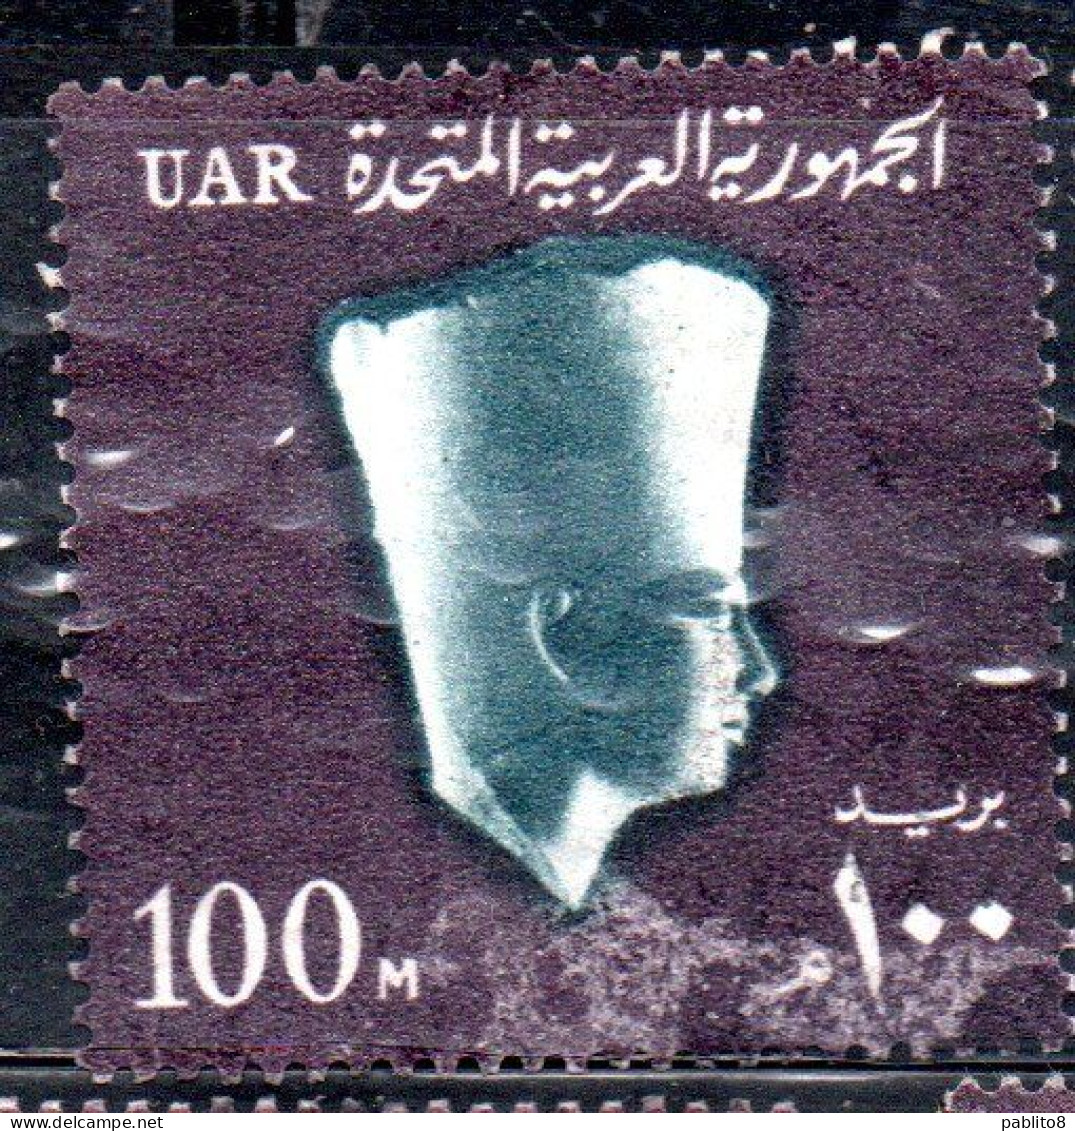 UAR EGYPT EGITTO 1964 1967 PHARAOH USERKAF 5th DYNASTY 100m USED USATO OBLITERE' - Oblitérés